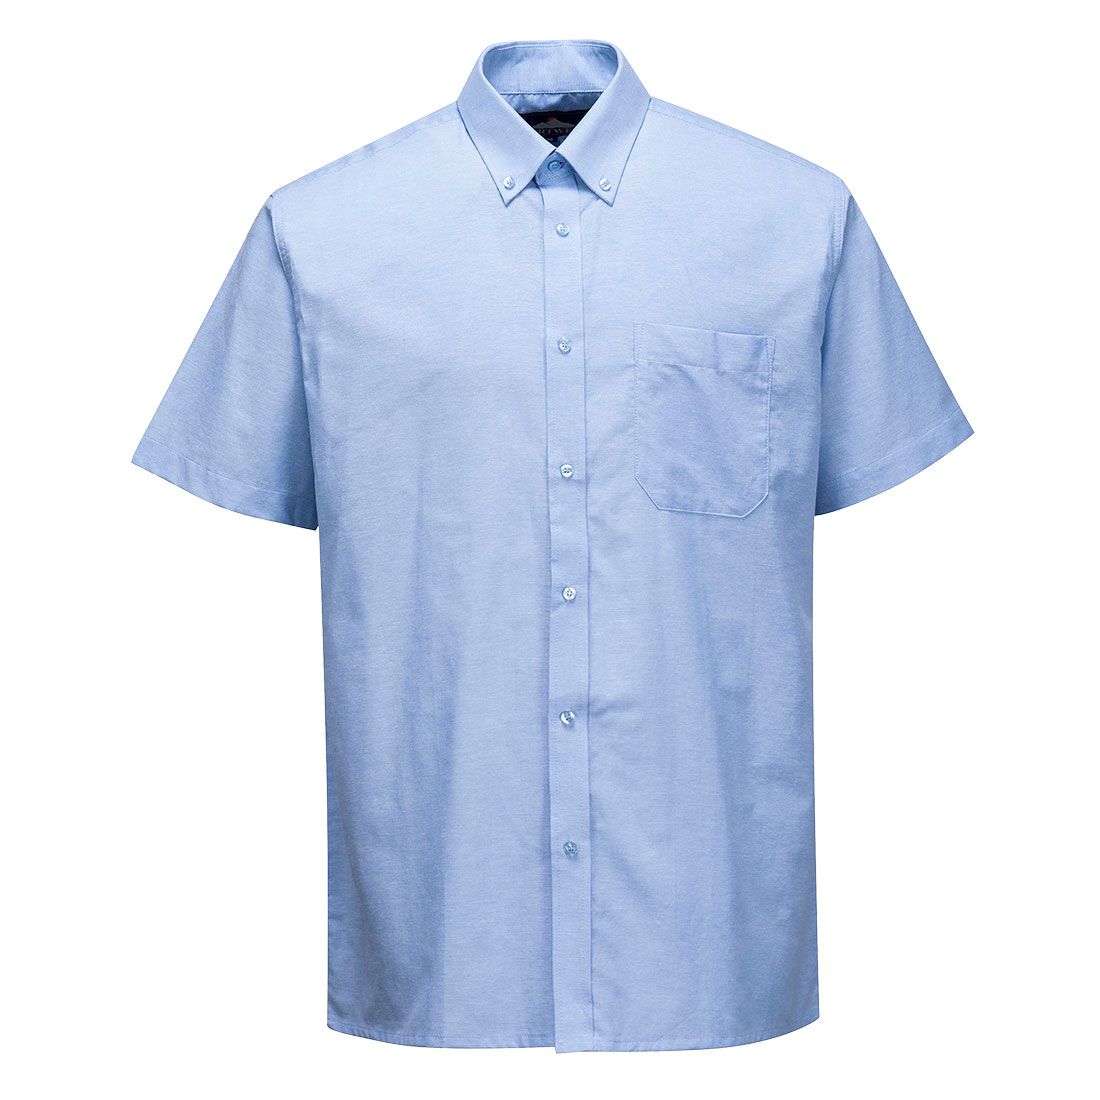 Portwest Oxford Shirt, Short Sleeves